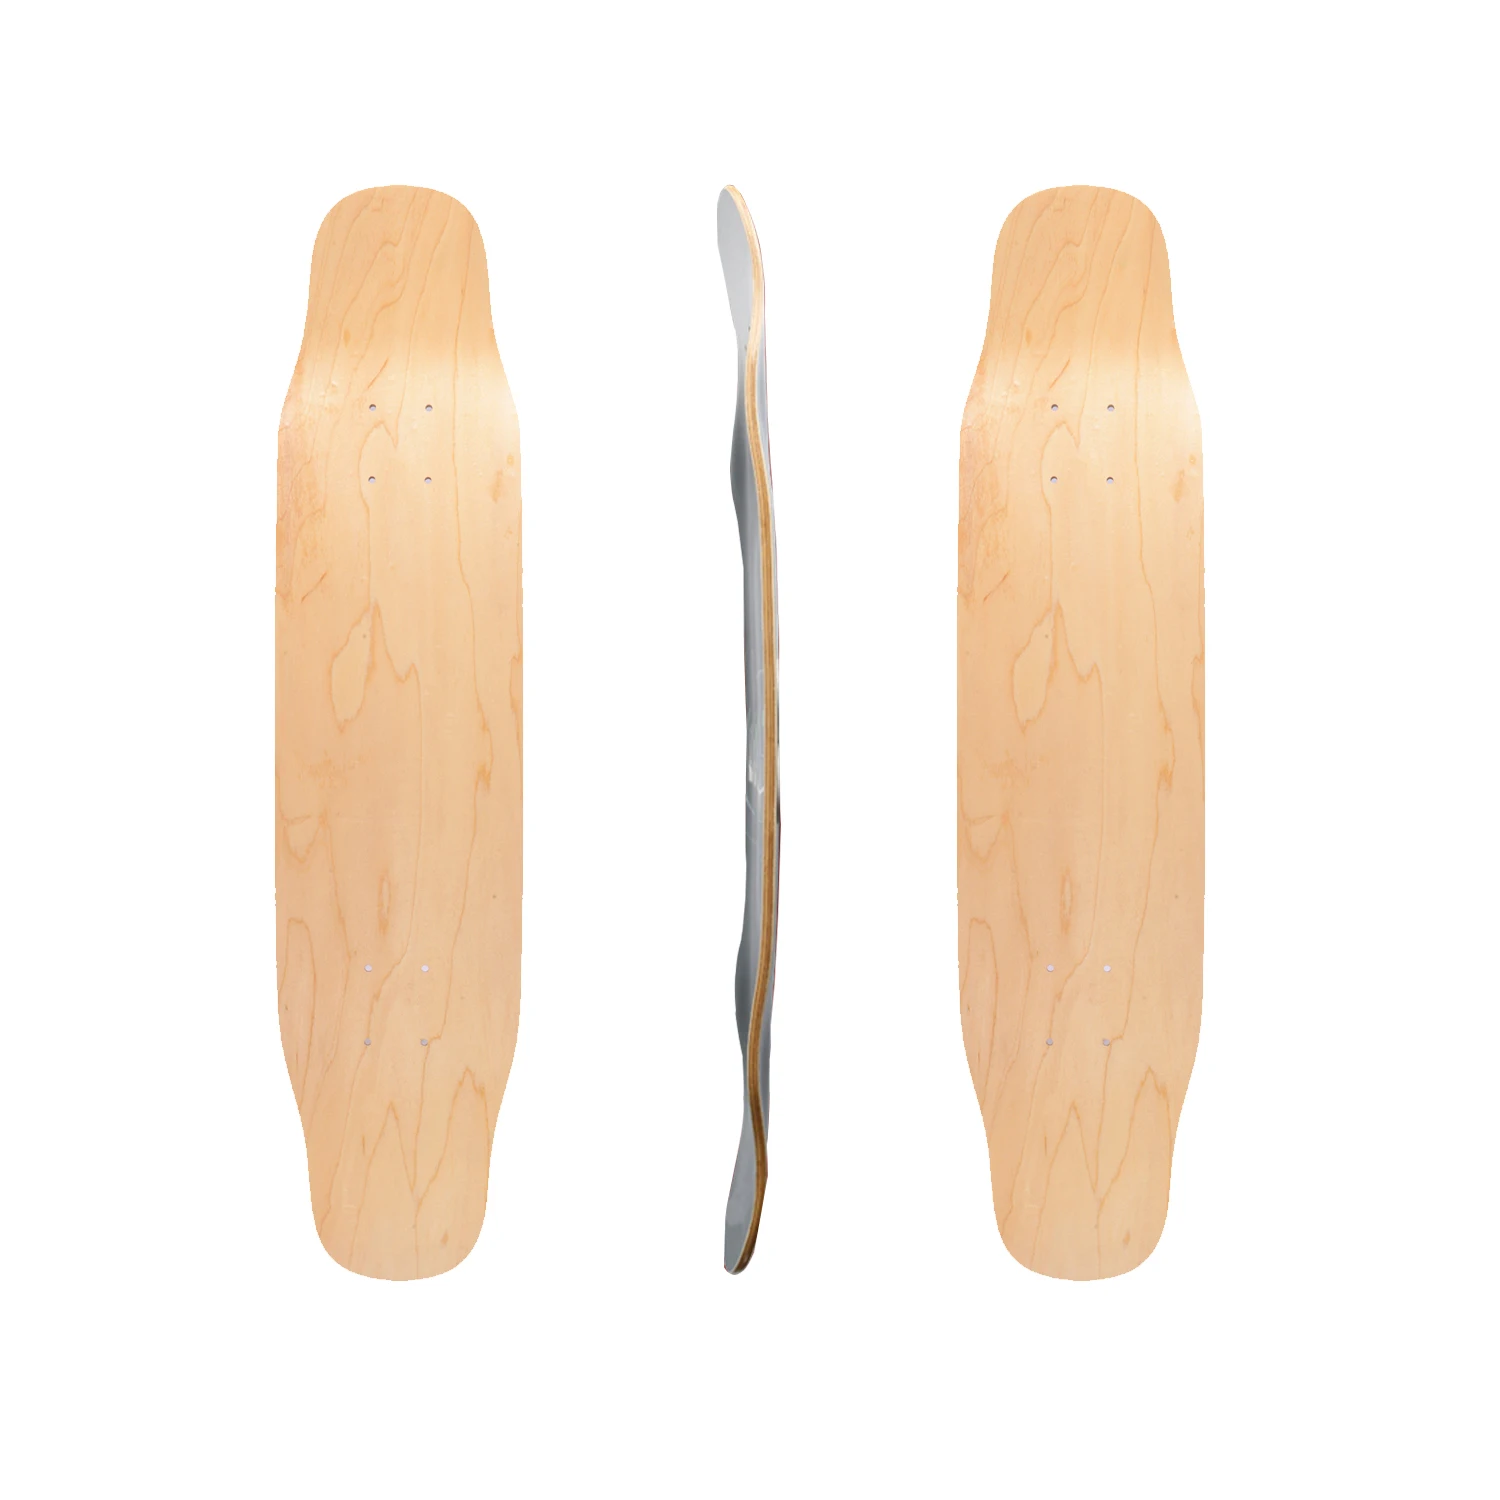 Professional High Quality Maple 7 Layers Skate Board Decks Blank Skateboard Deck Longboard Decks